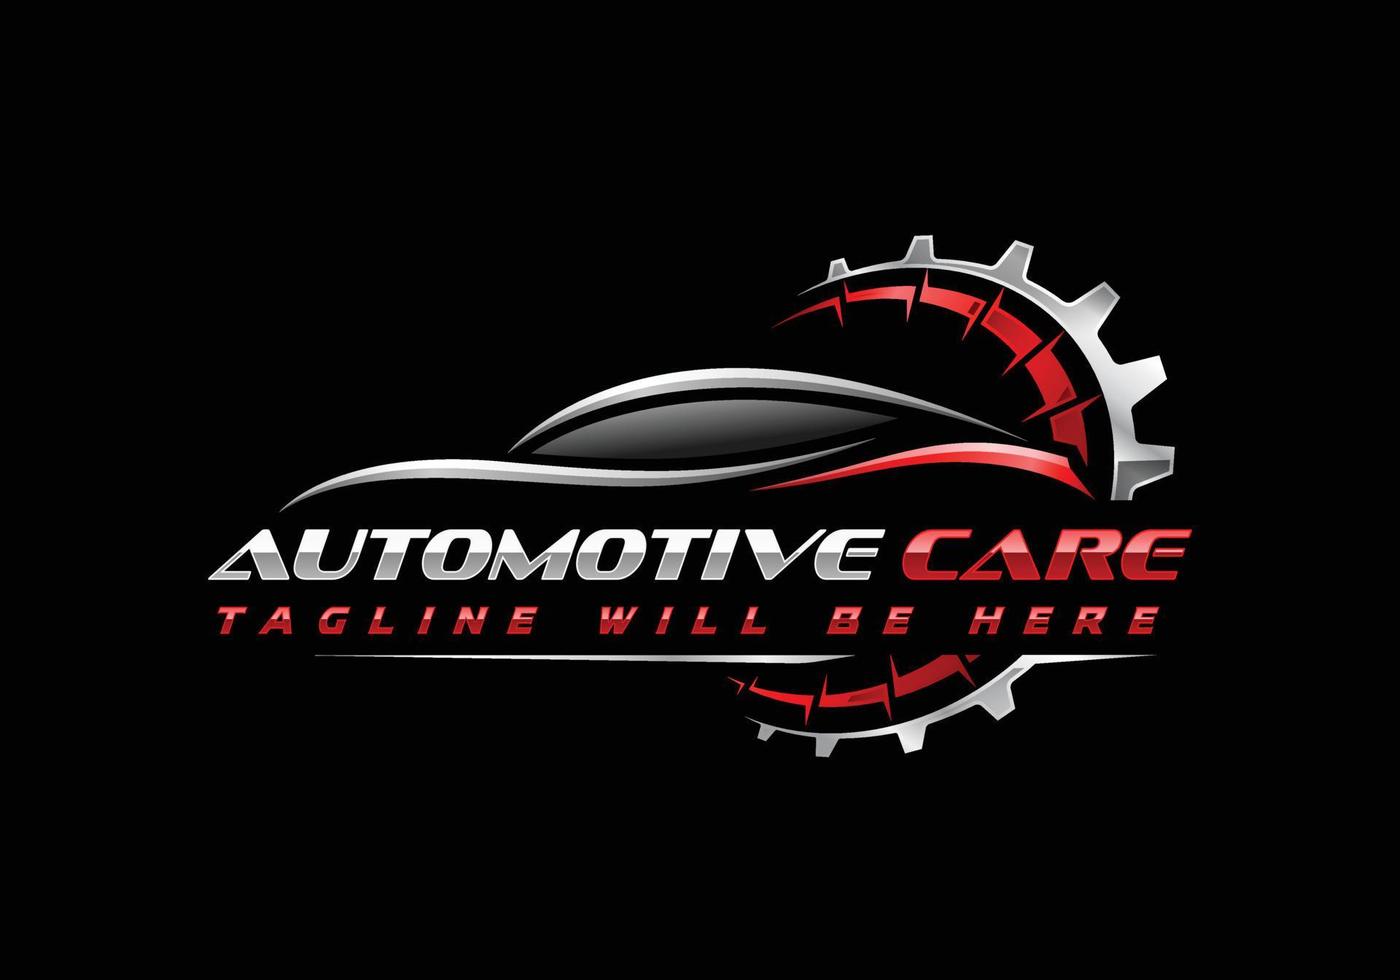 Car repair logo auto repair logo car garage car gear logo car service logo automobile engineering logo vector